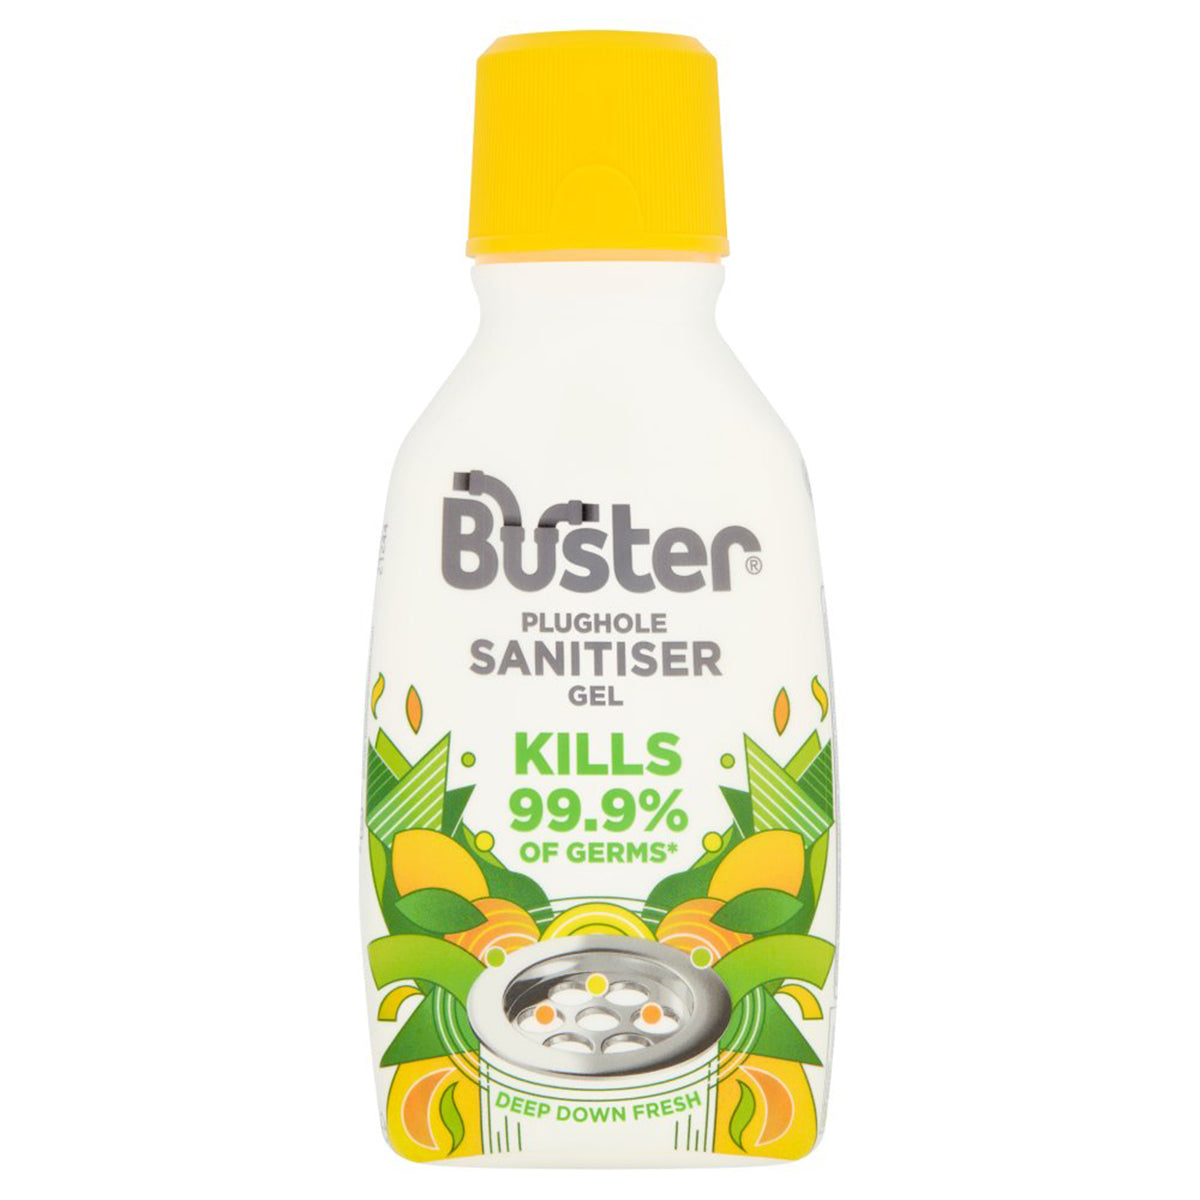 Buster - Plughole Sanitiser Gel - 300ml kills 99% of germs.